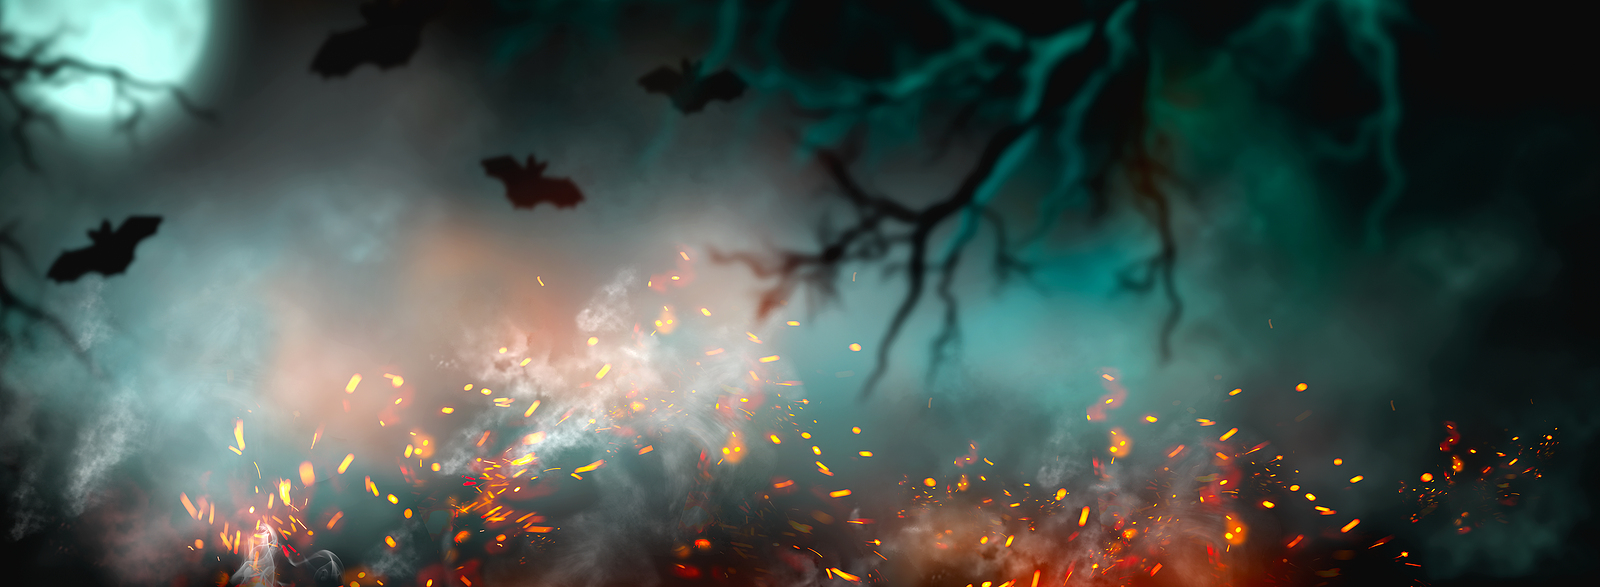 Beautiful dark deep forest backdrop with smoke, fire, vampire bats